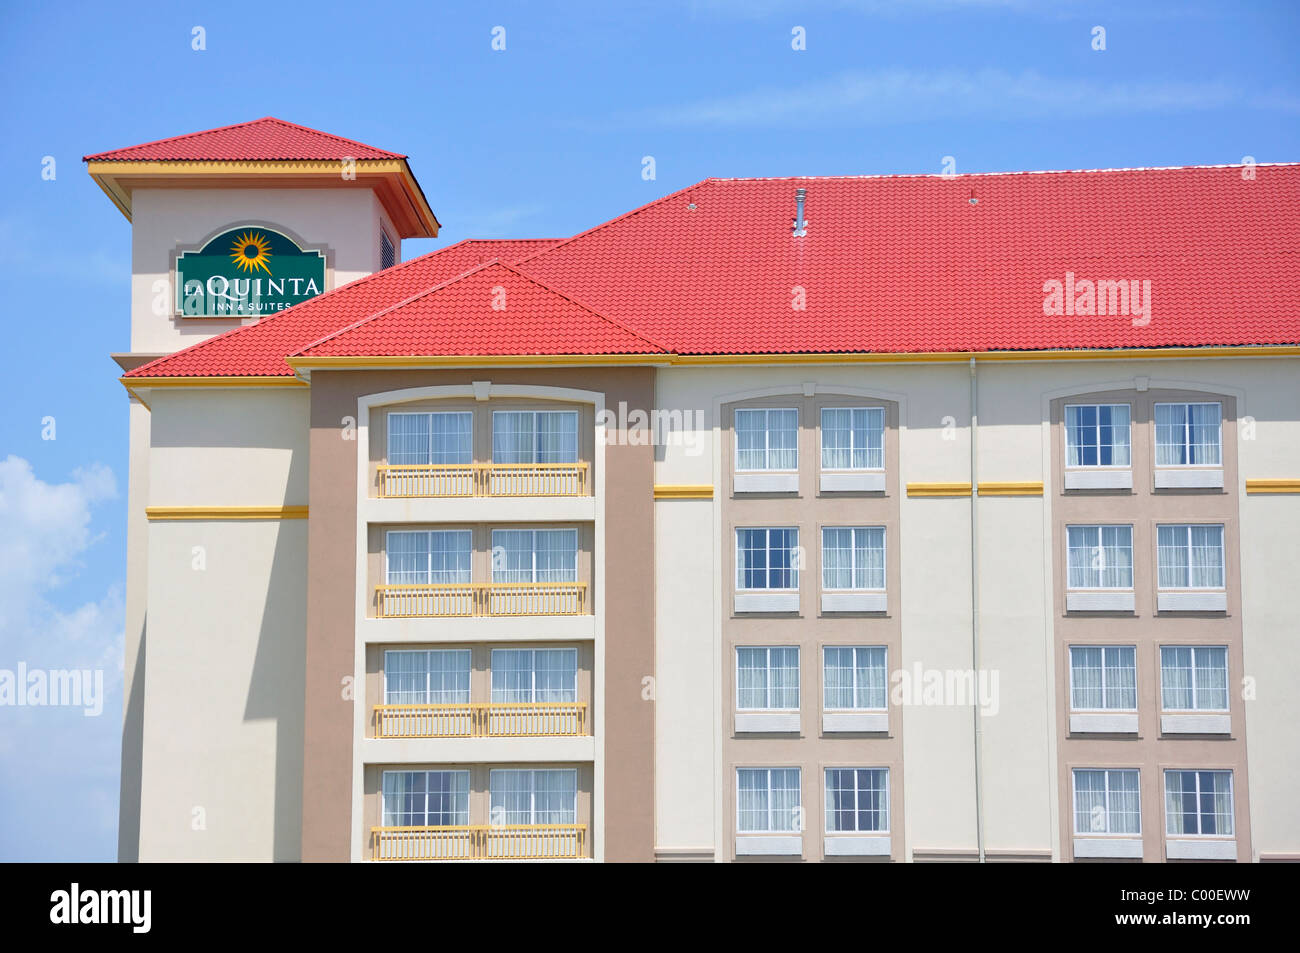 La Quinta Hotel In Fort Worth Arlington Tx Usa Stock Photo